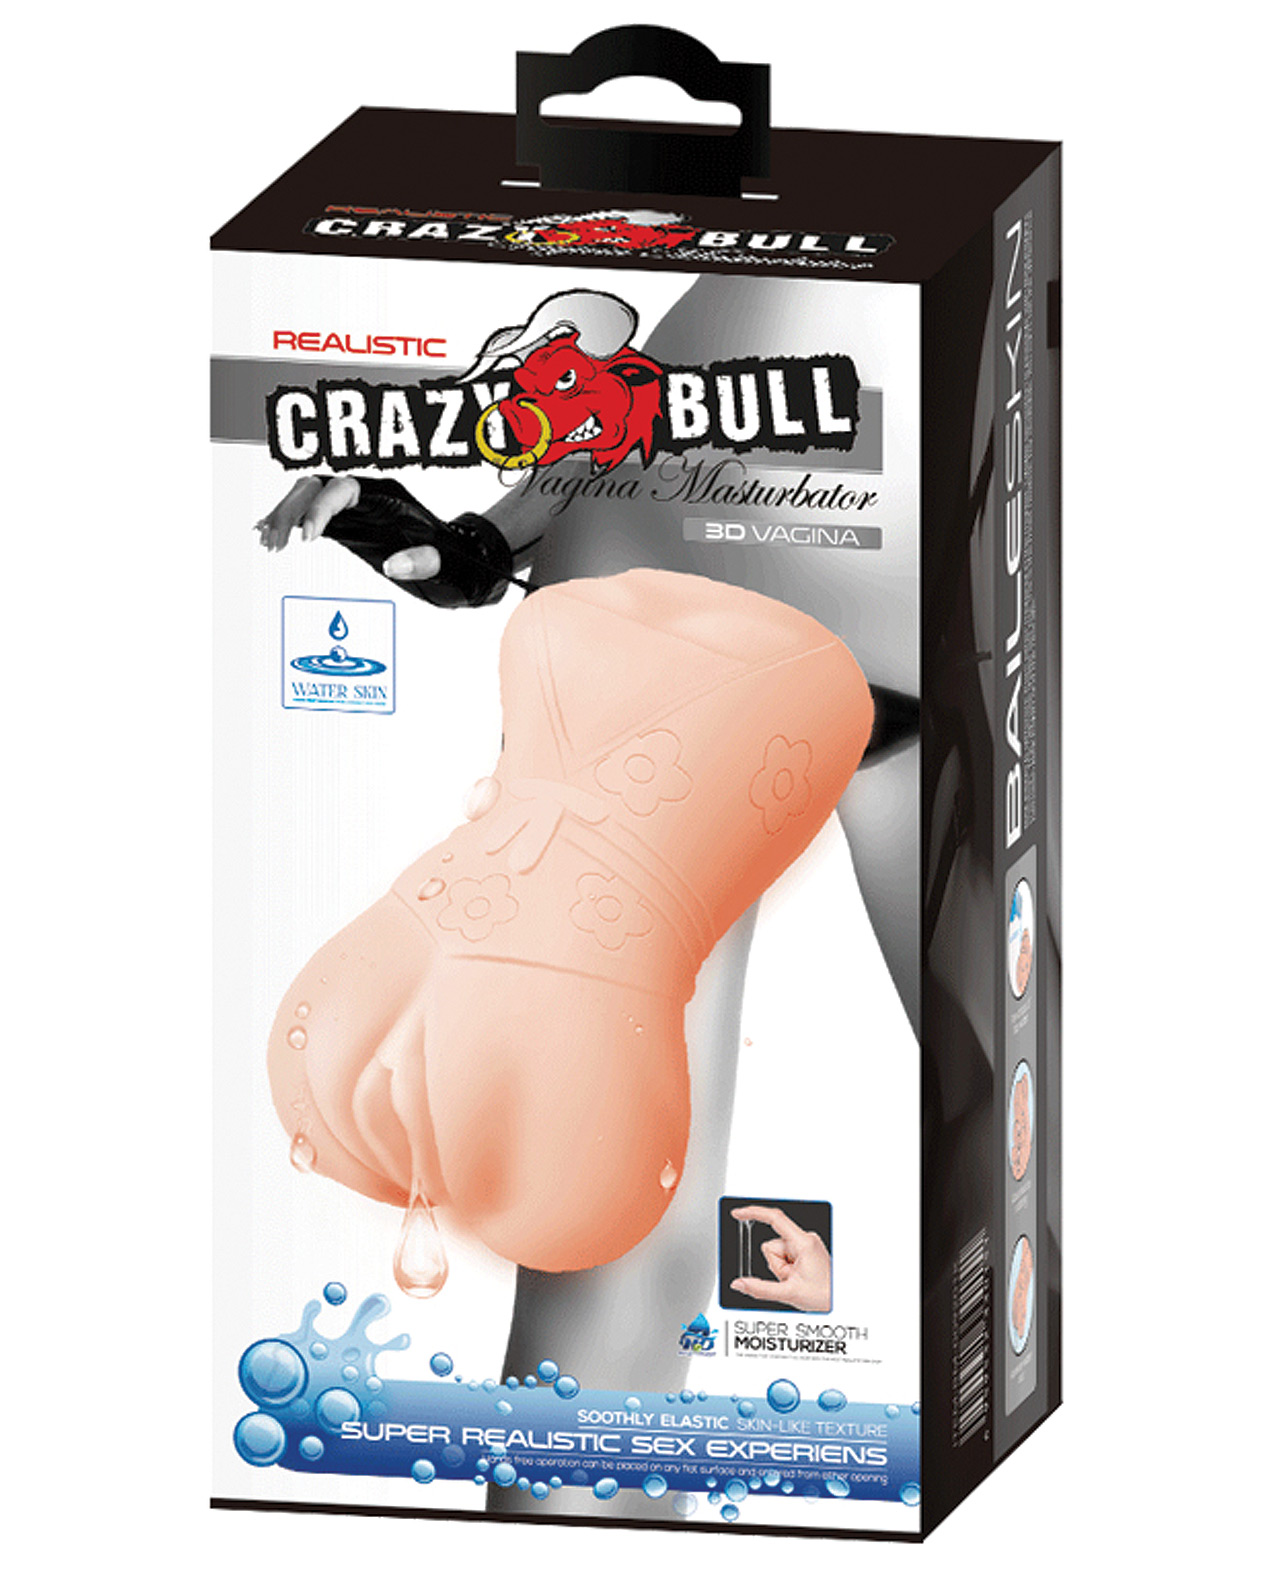 The Crazy Bull No Lube Masturbator Sleeve - Vagina is among the top Dolls &...